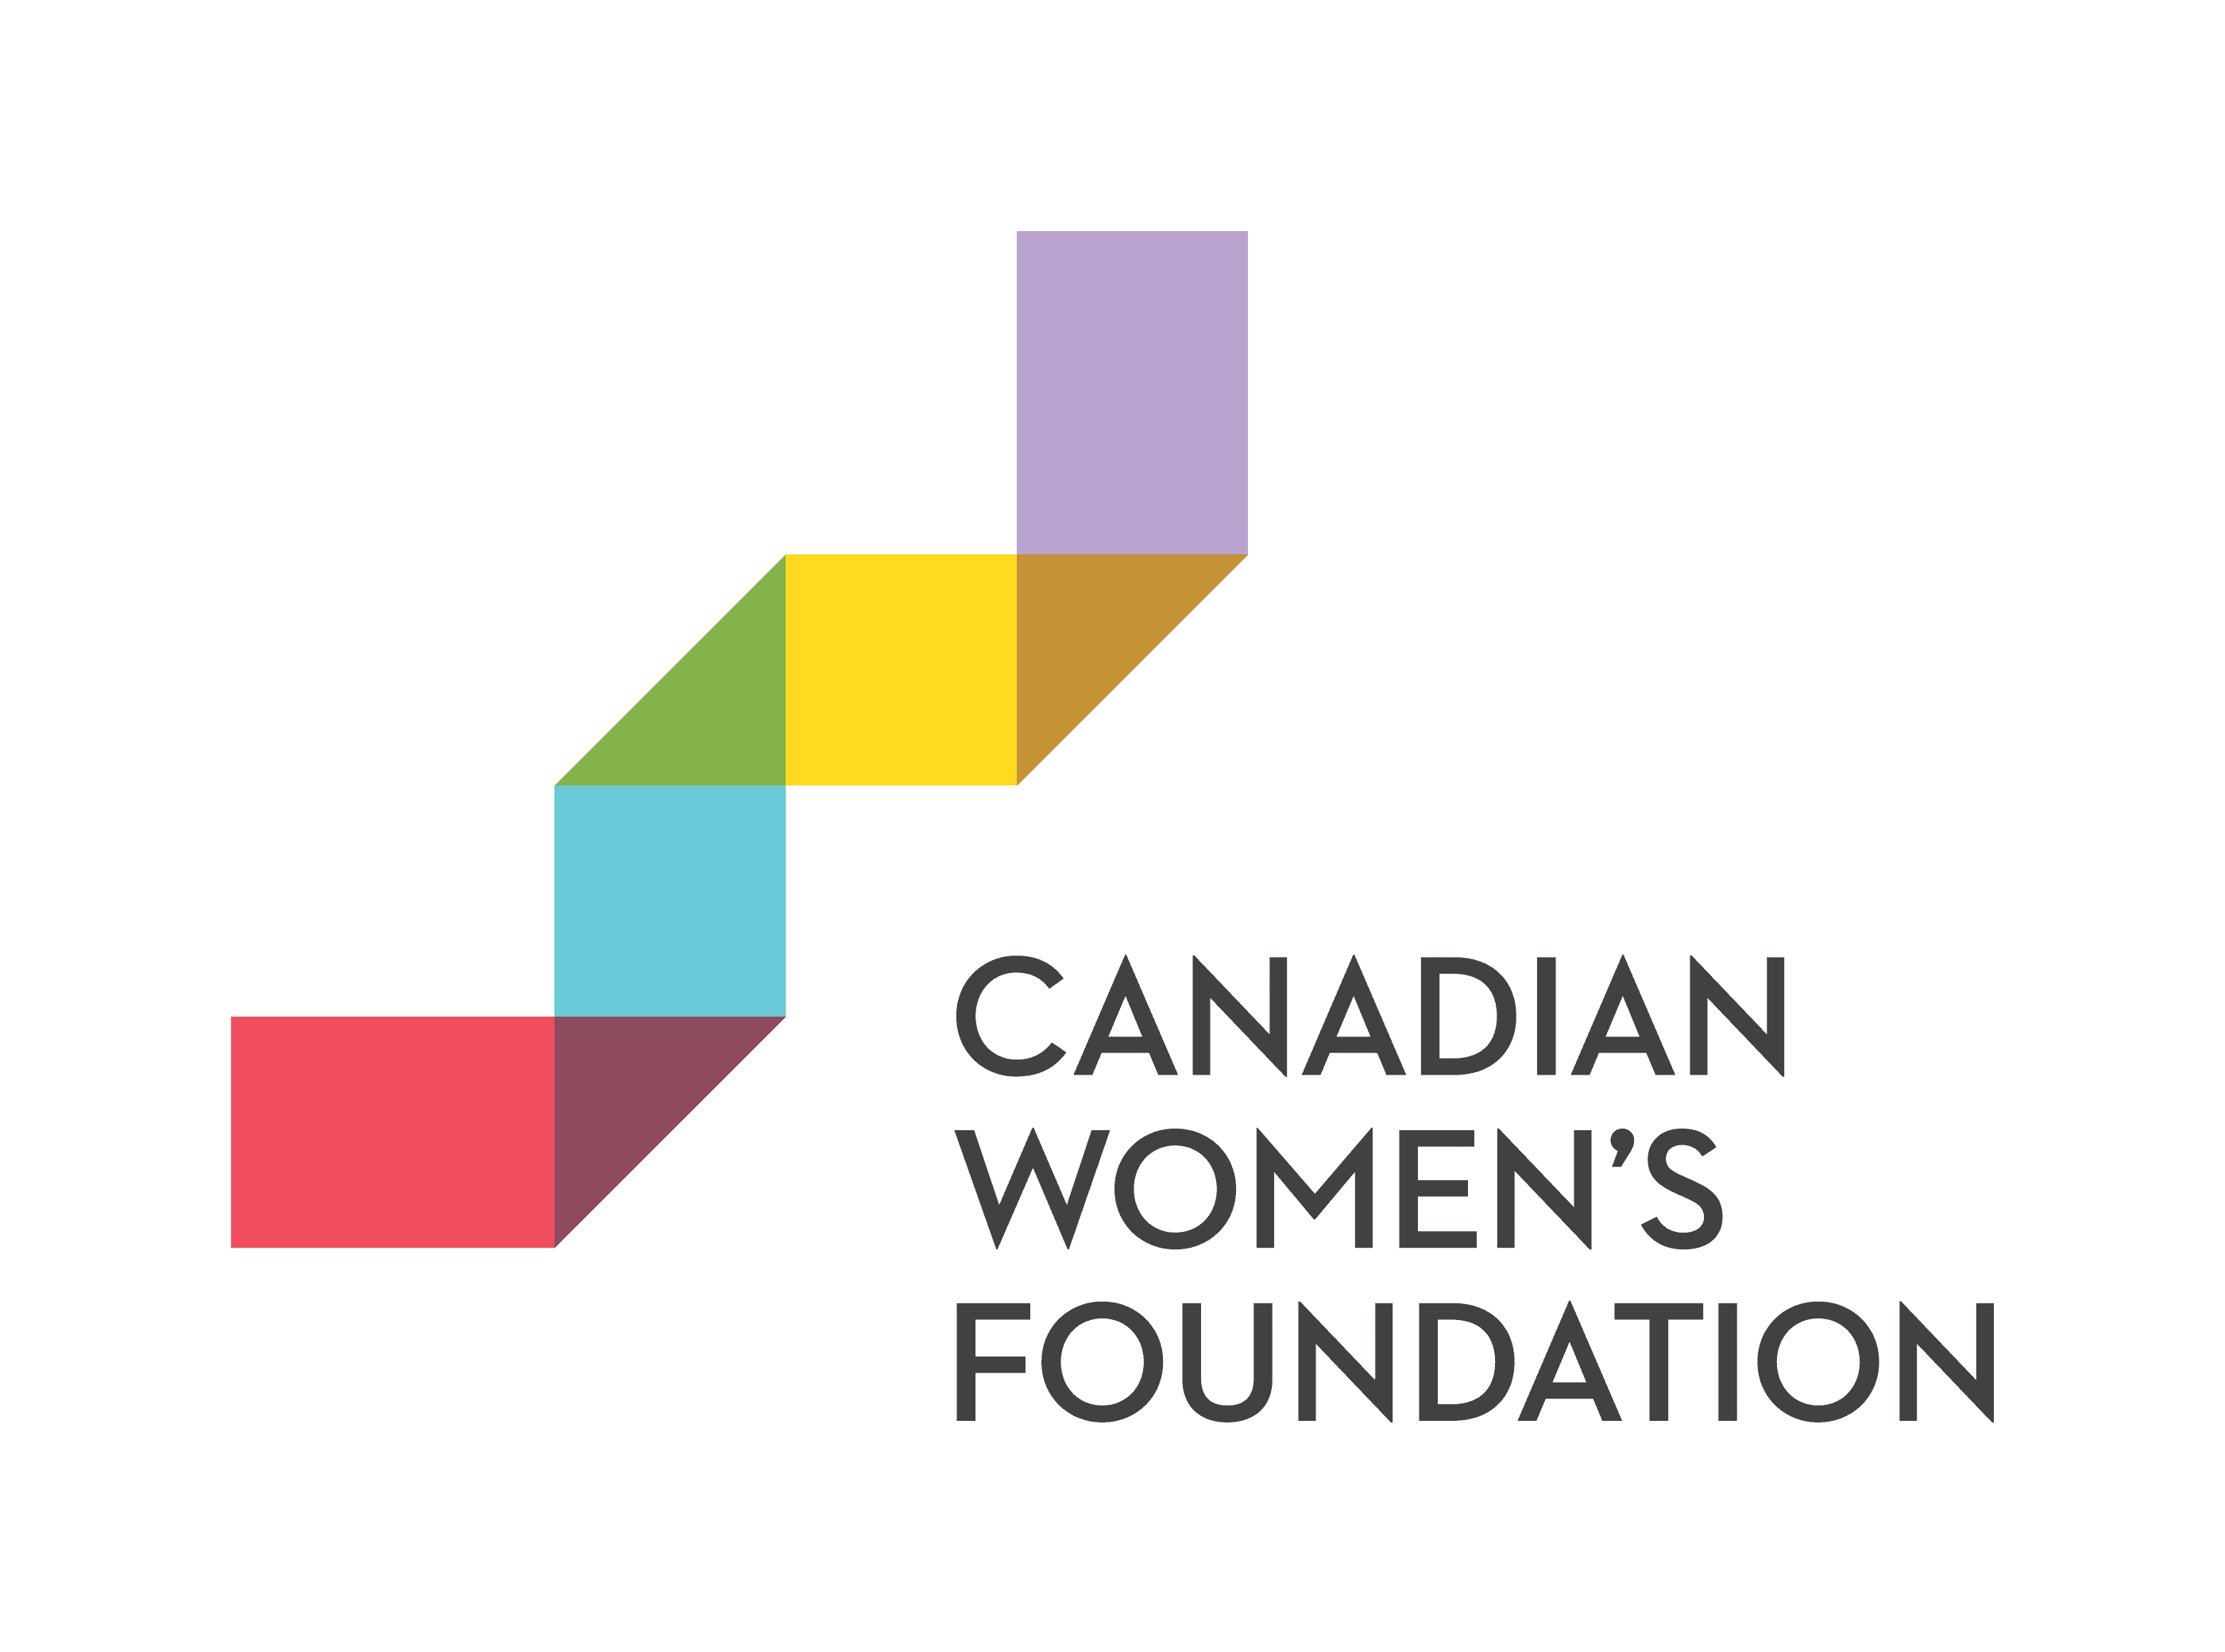 The Canadian Women's Foundation logo.